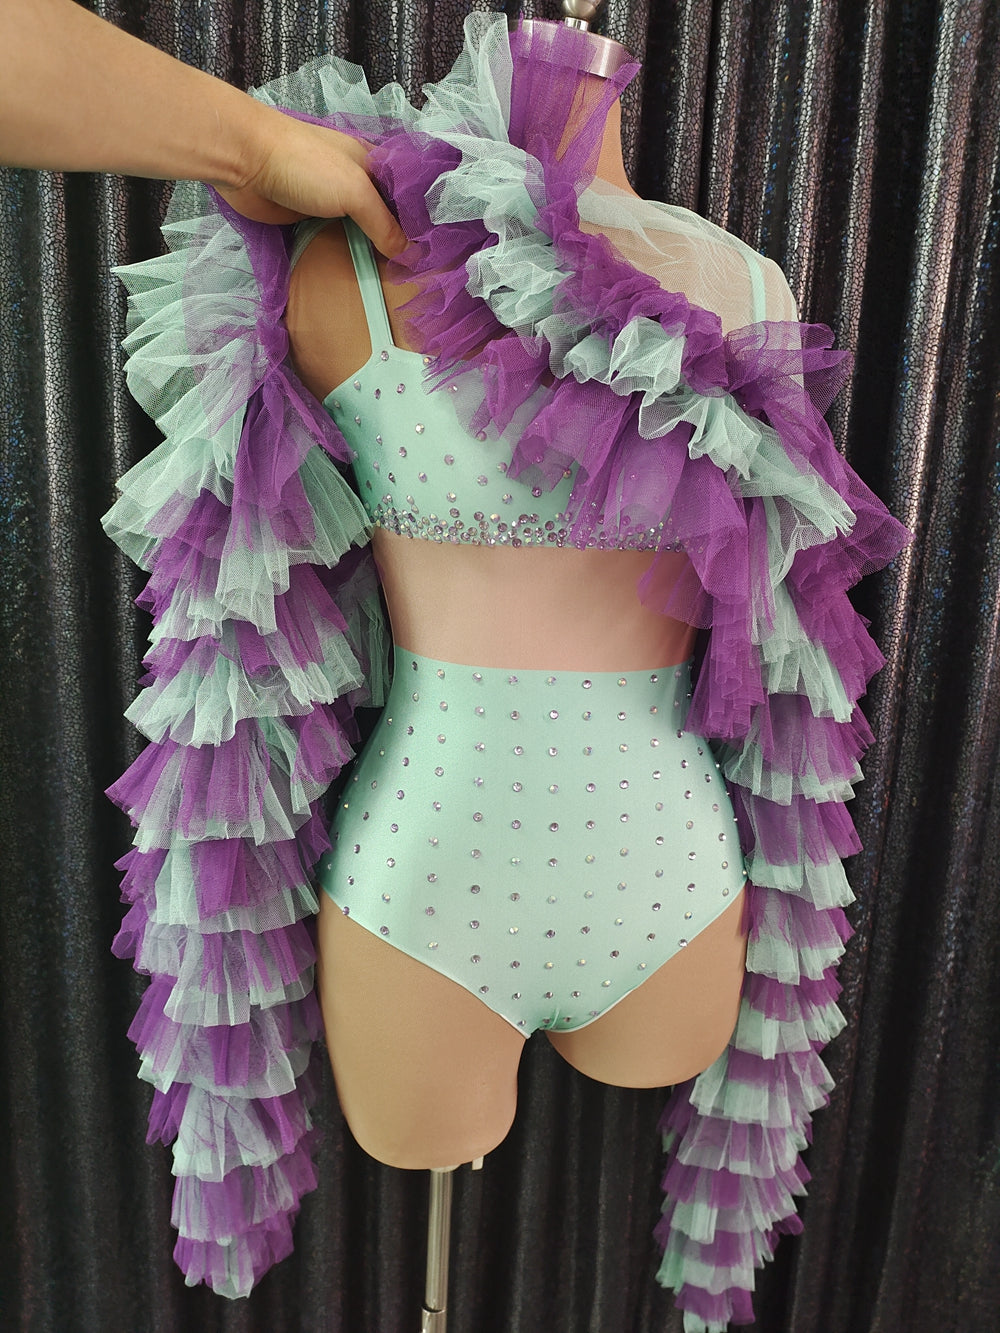 New Mesh Ruffle Cloak Rhinestones Leotard Two Pieces Set Women Performance Dance Costume Nightclub Outfit Singer Show Stage Wear